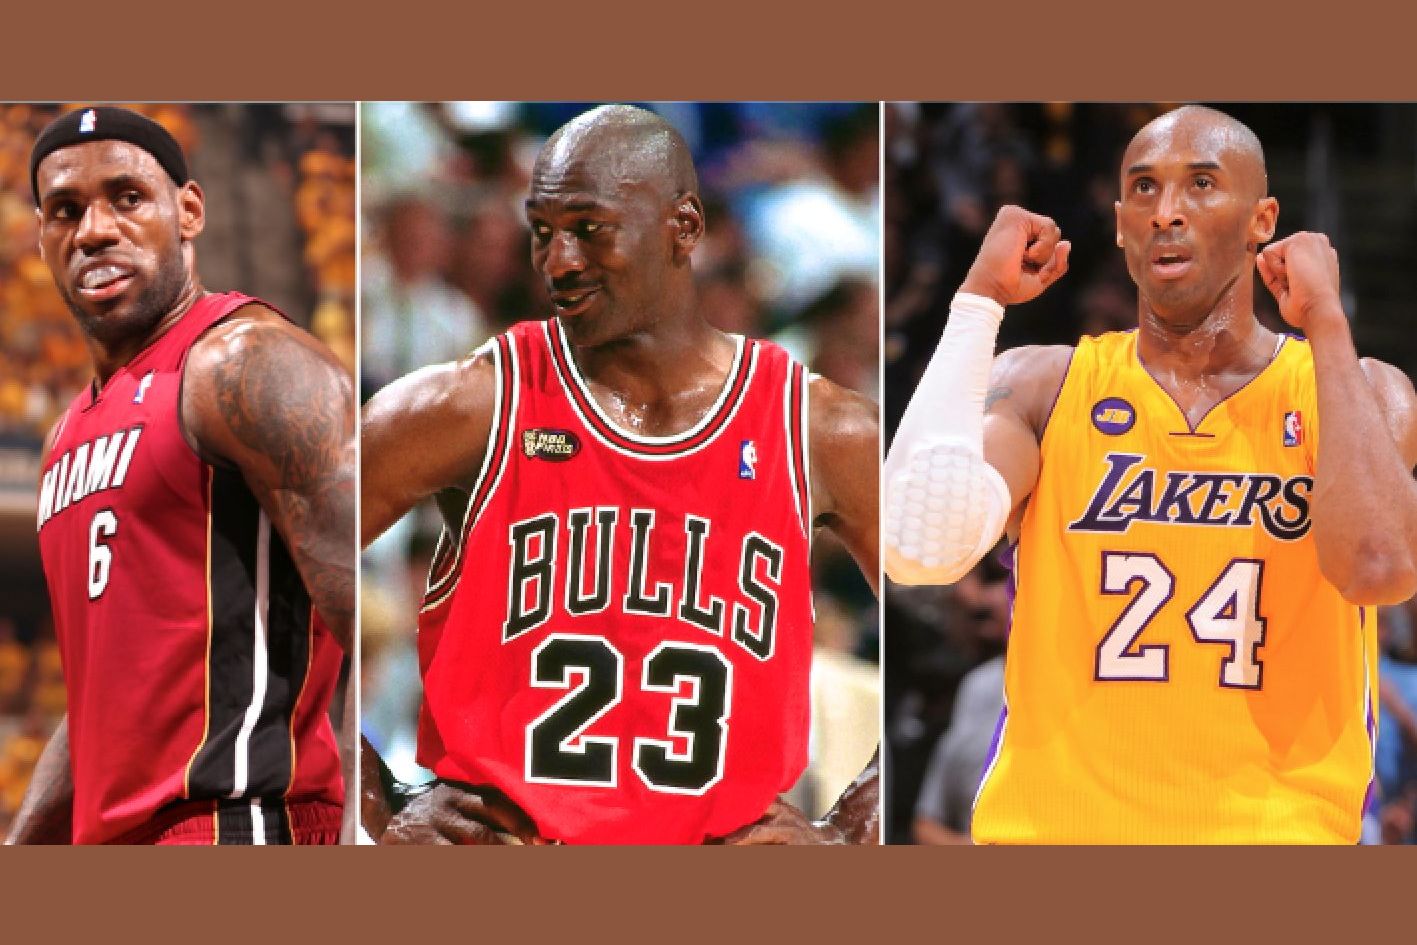 POLL: Michael Jordan, Kobe Bryant or LeBron James in Their Primes?